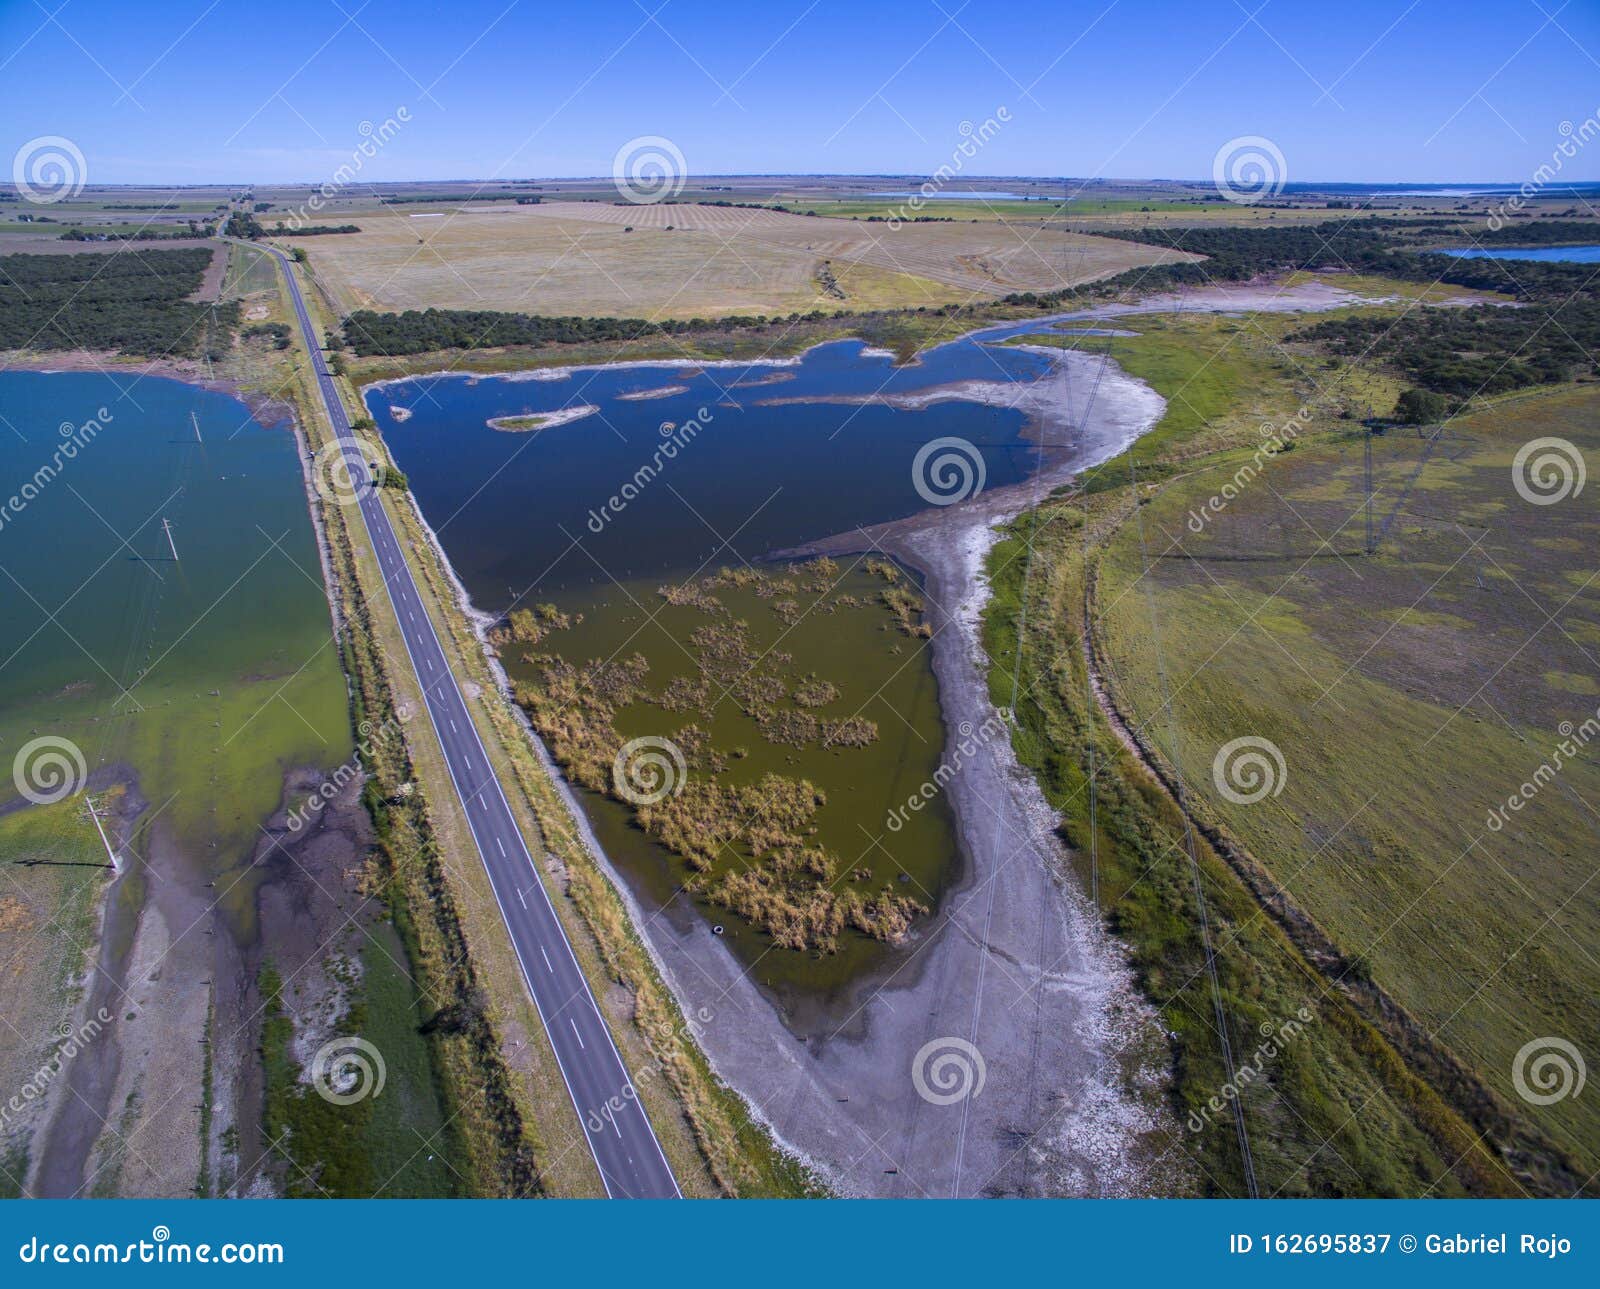 pampas lagoon, aerial view